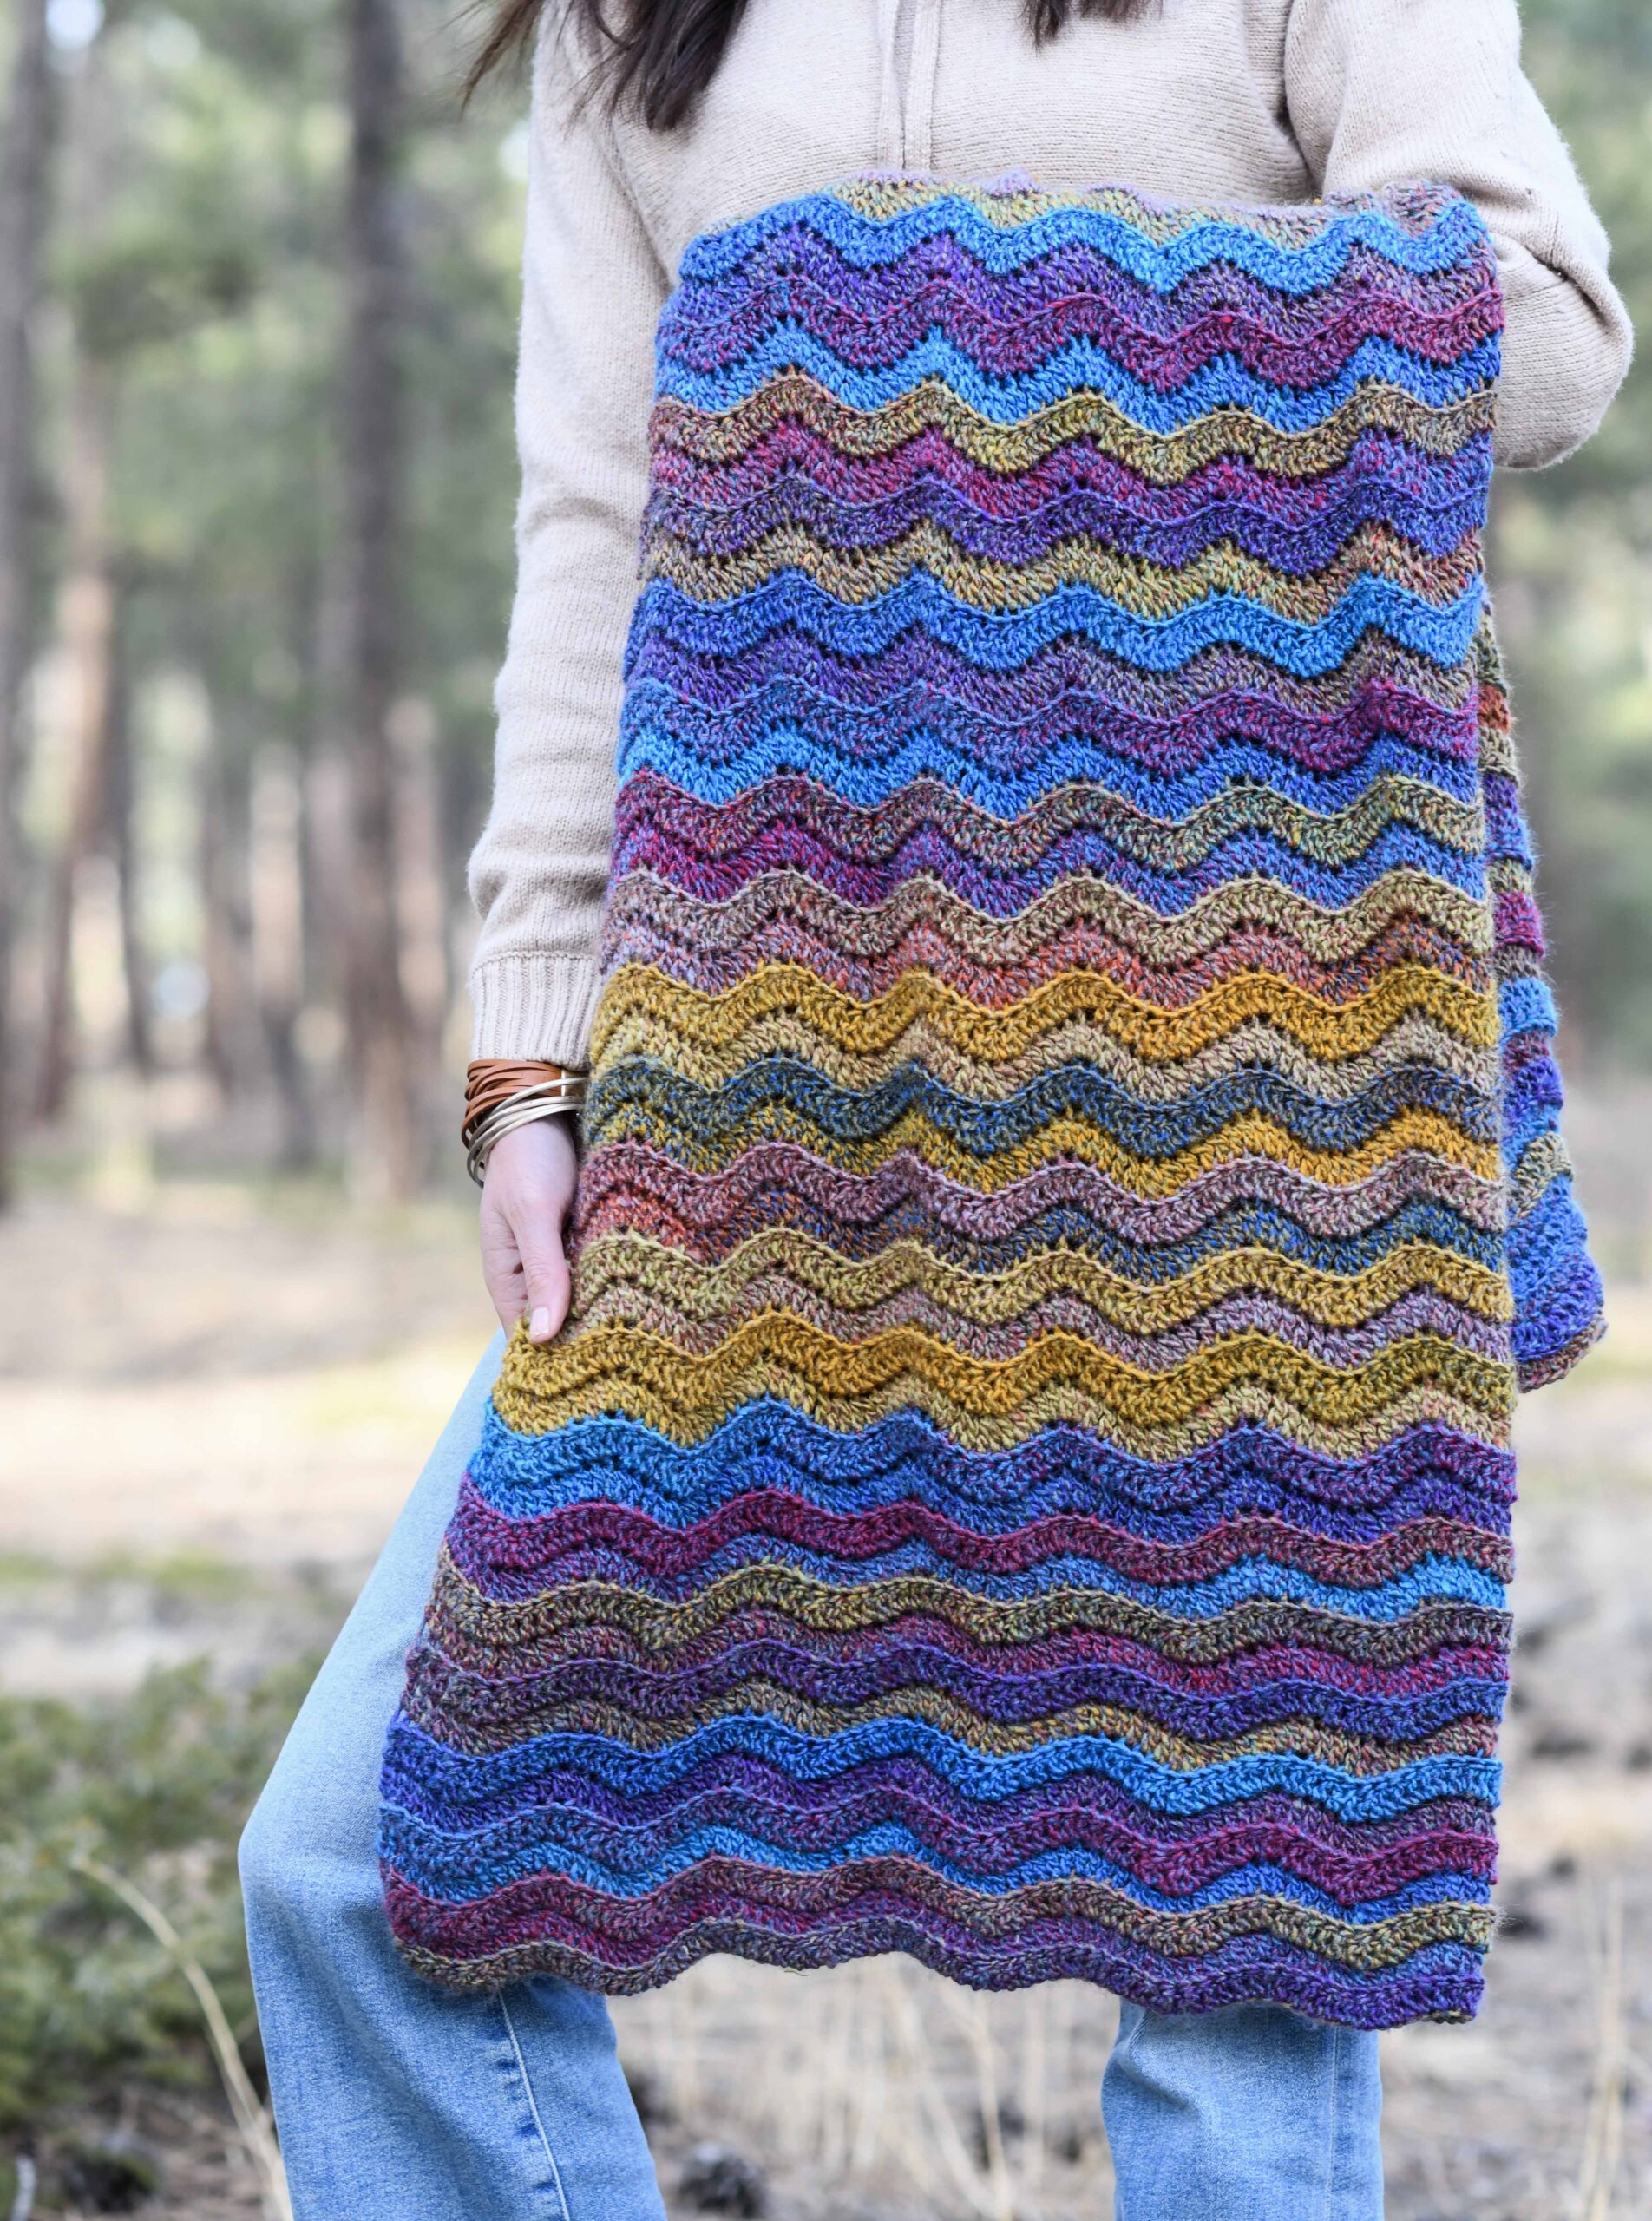 Free Crochet Pattern-- X-O Afghan